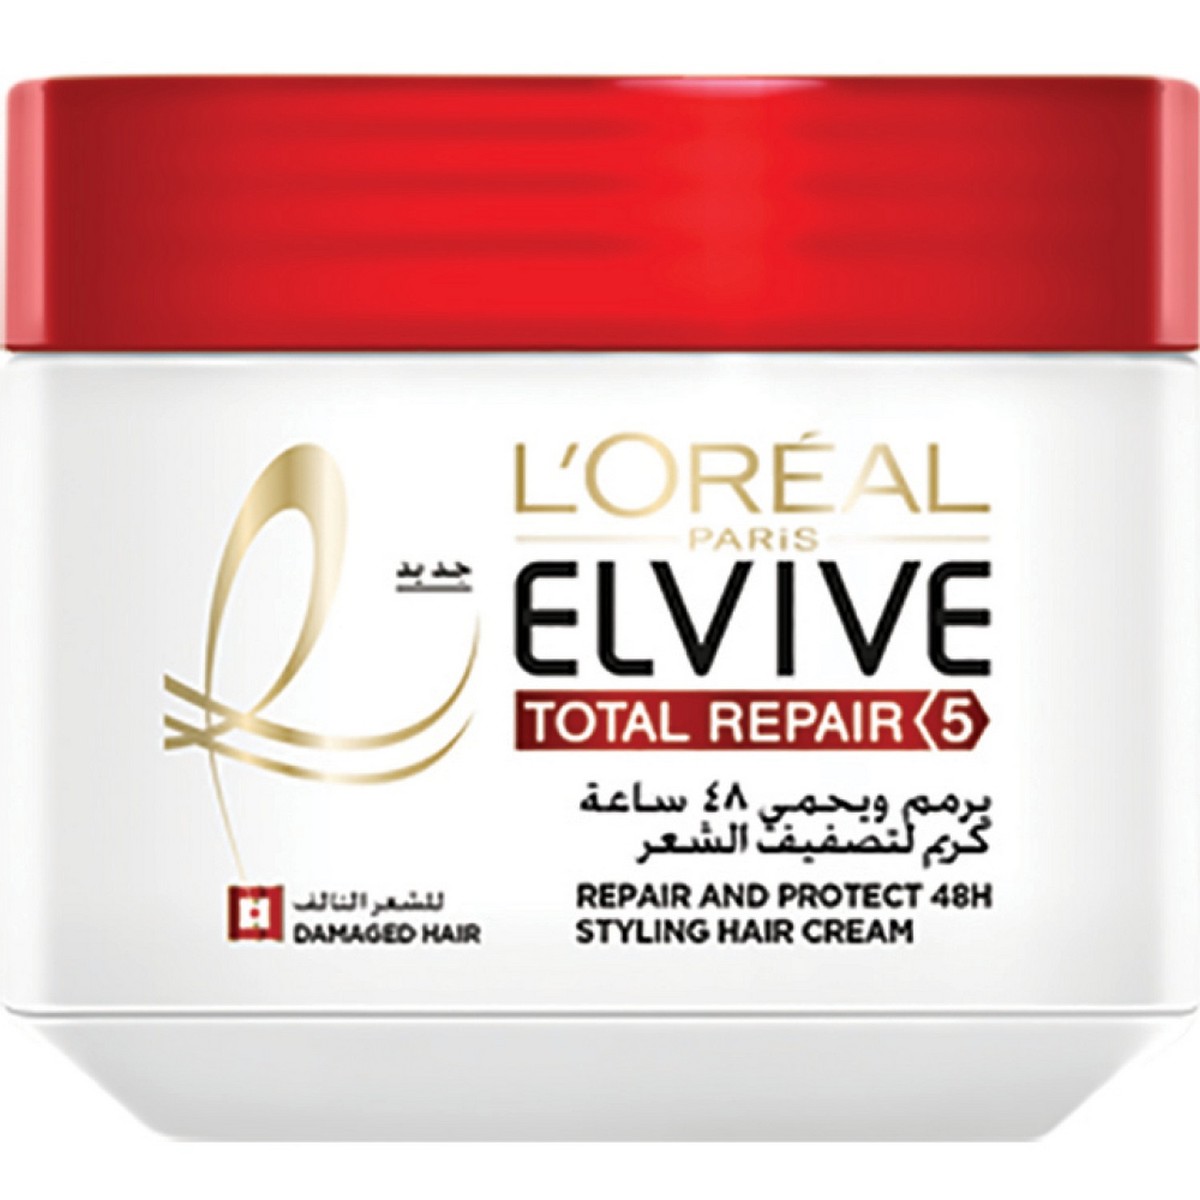 L'Oreal Elvive Damage Hair Total Repair hair Cream 200 ml